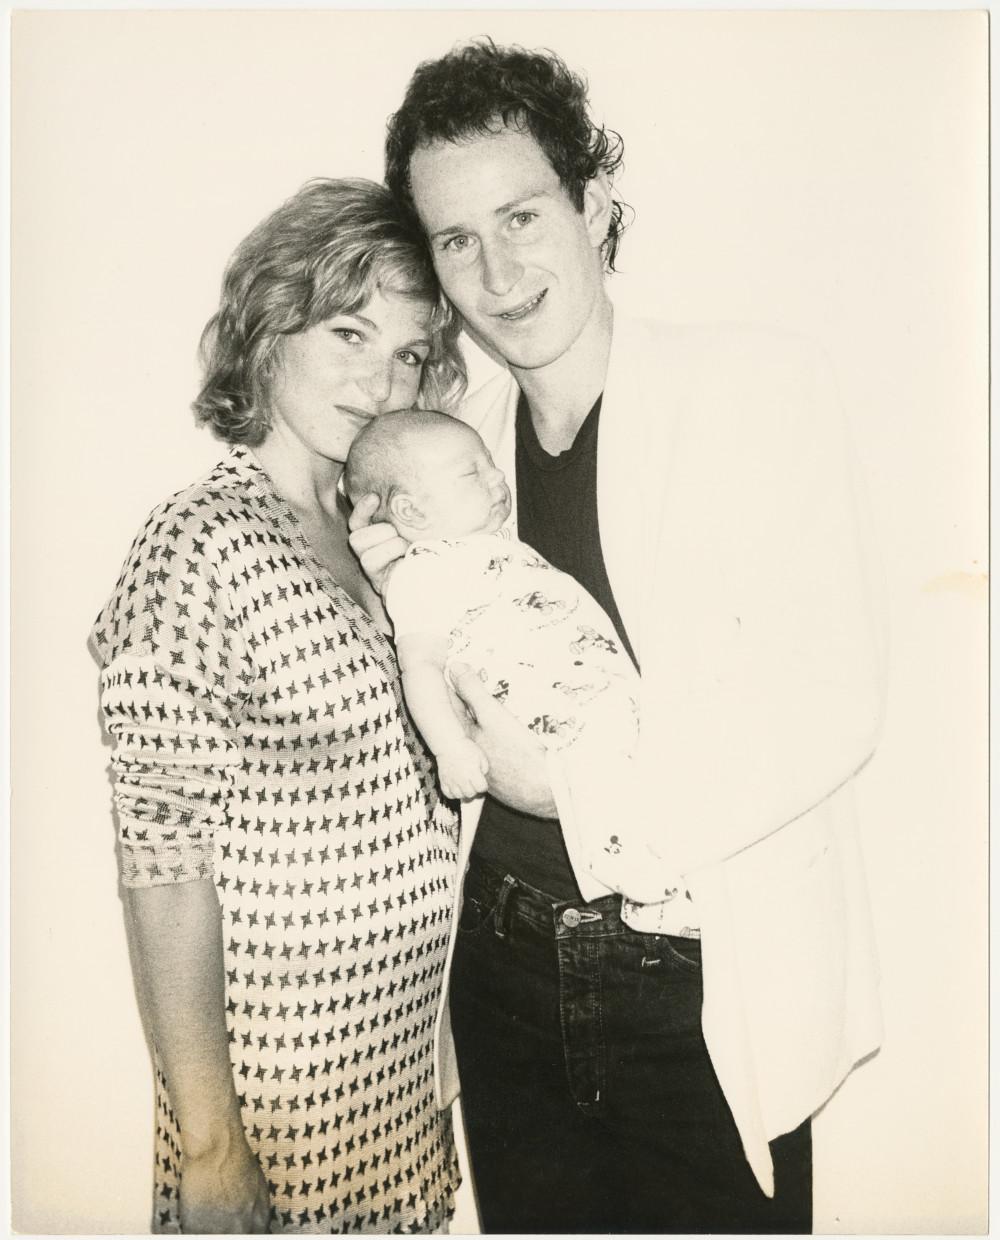 Andy Warhol Portrait Photograph - Tatum O'Neal, John McEnroe and baby